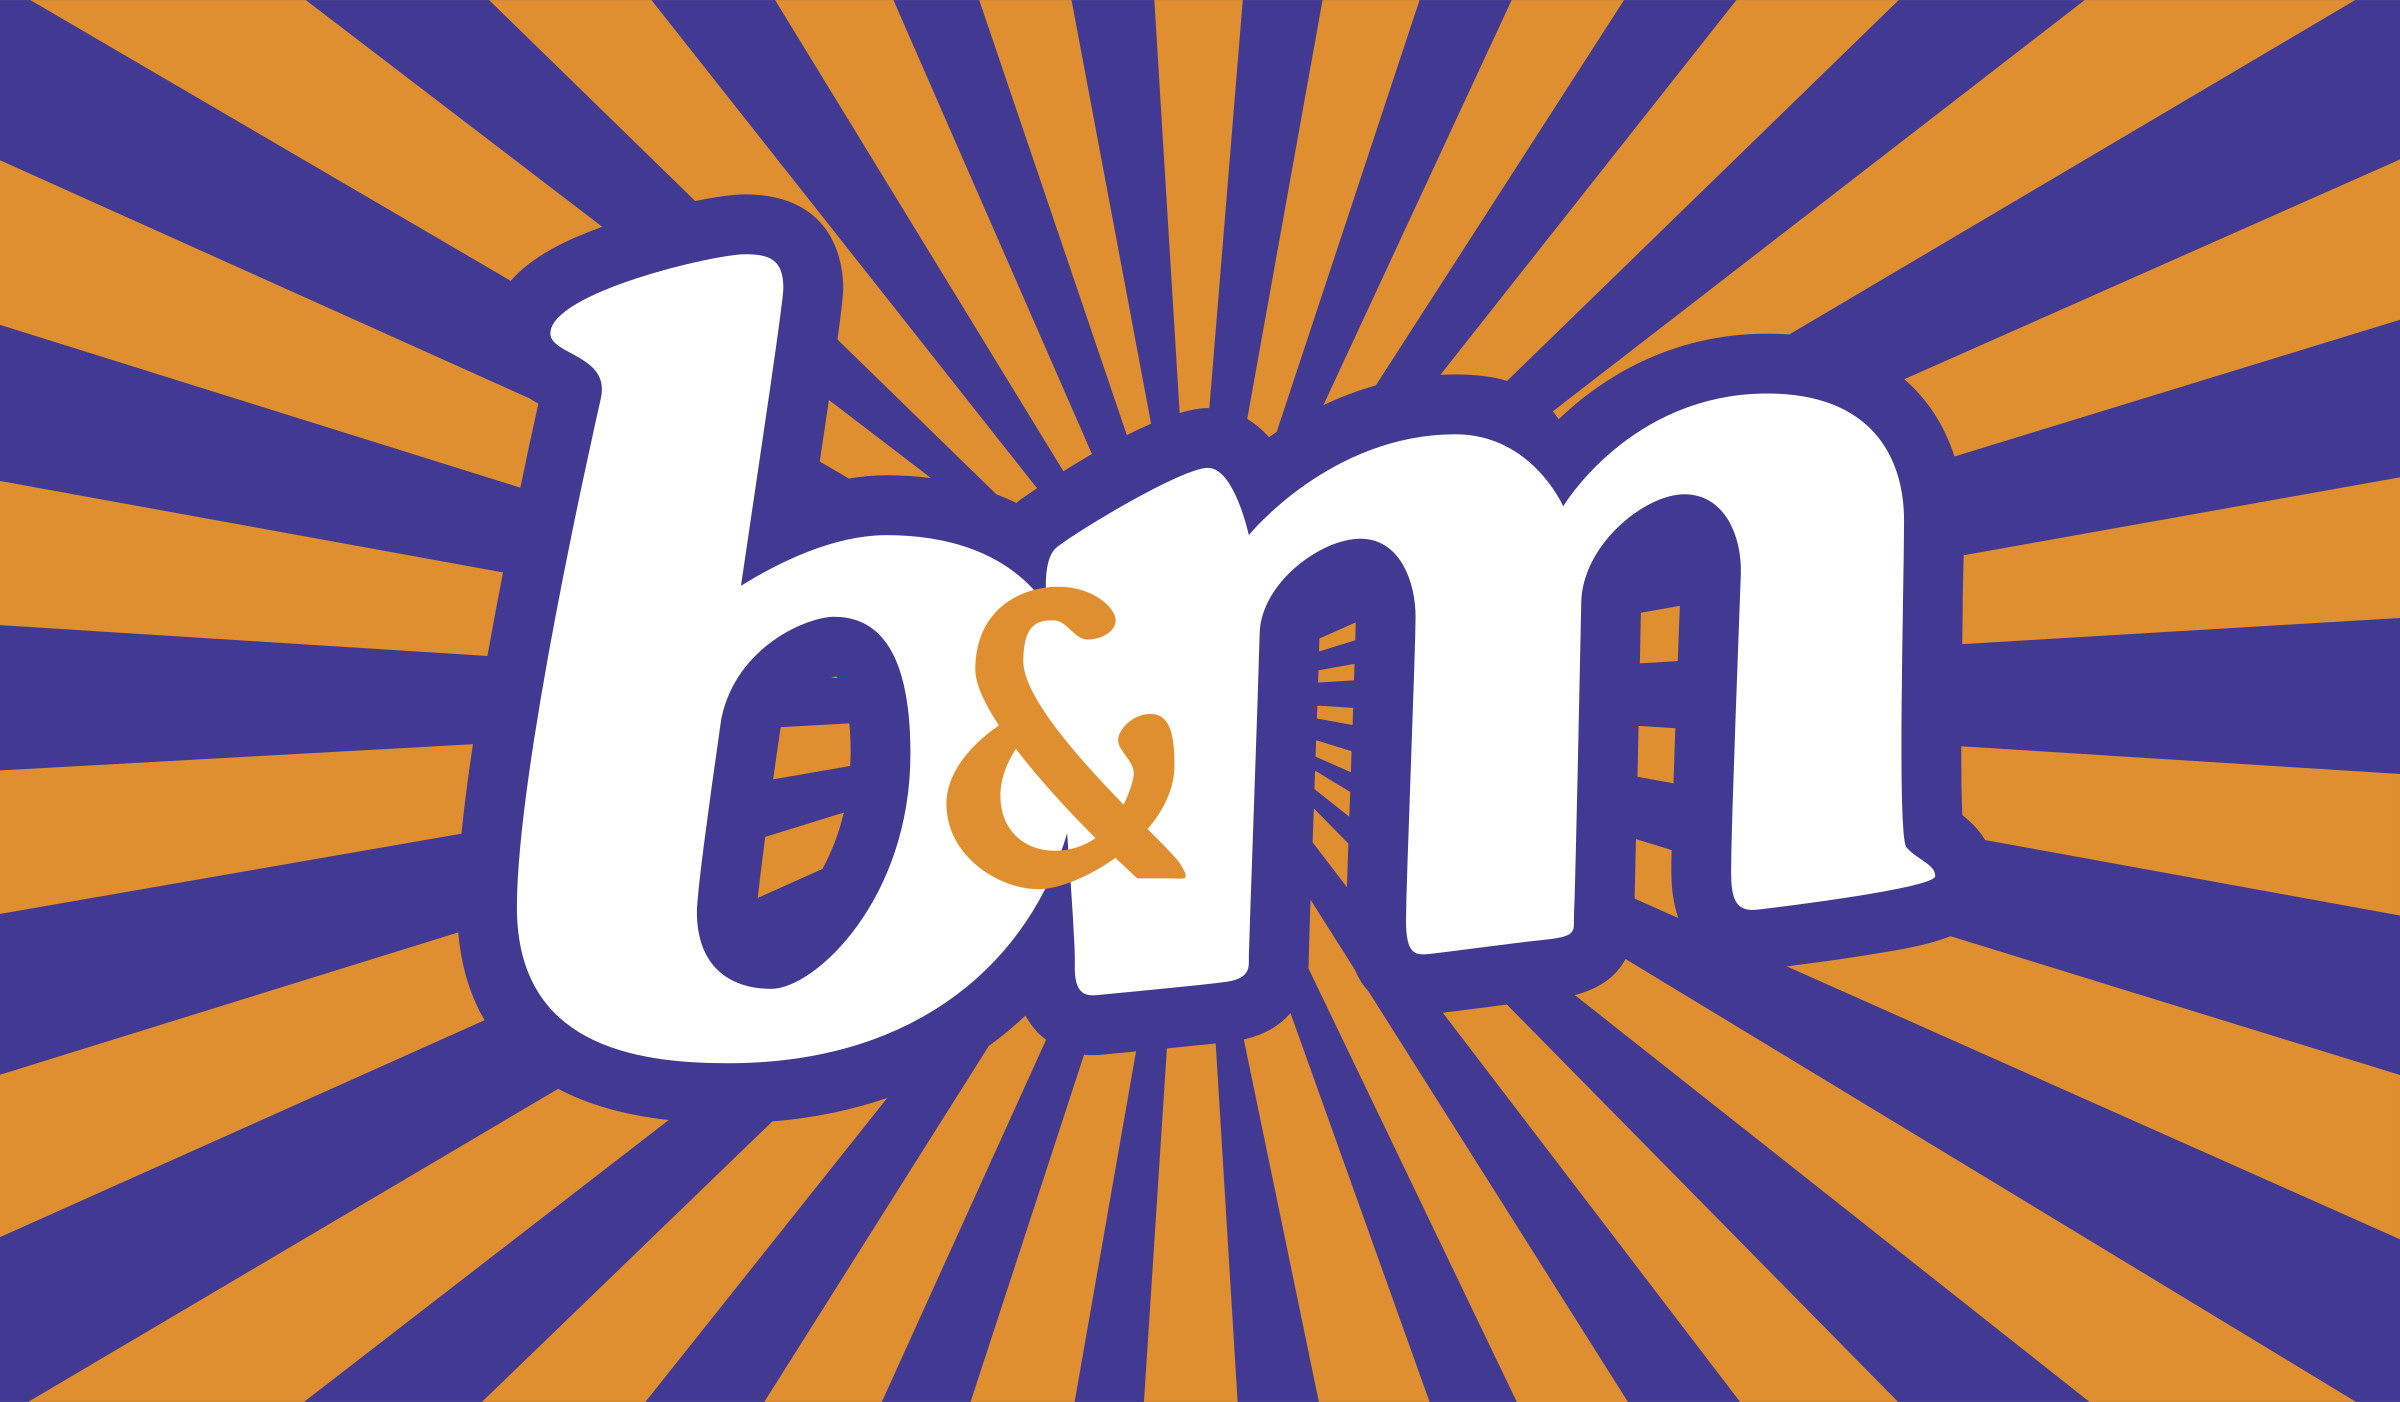 b-m-bargains-logo-png-transparent 